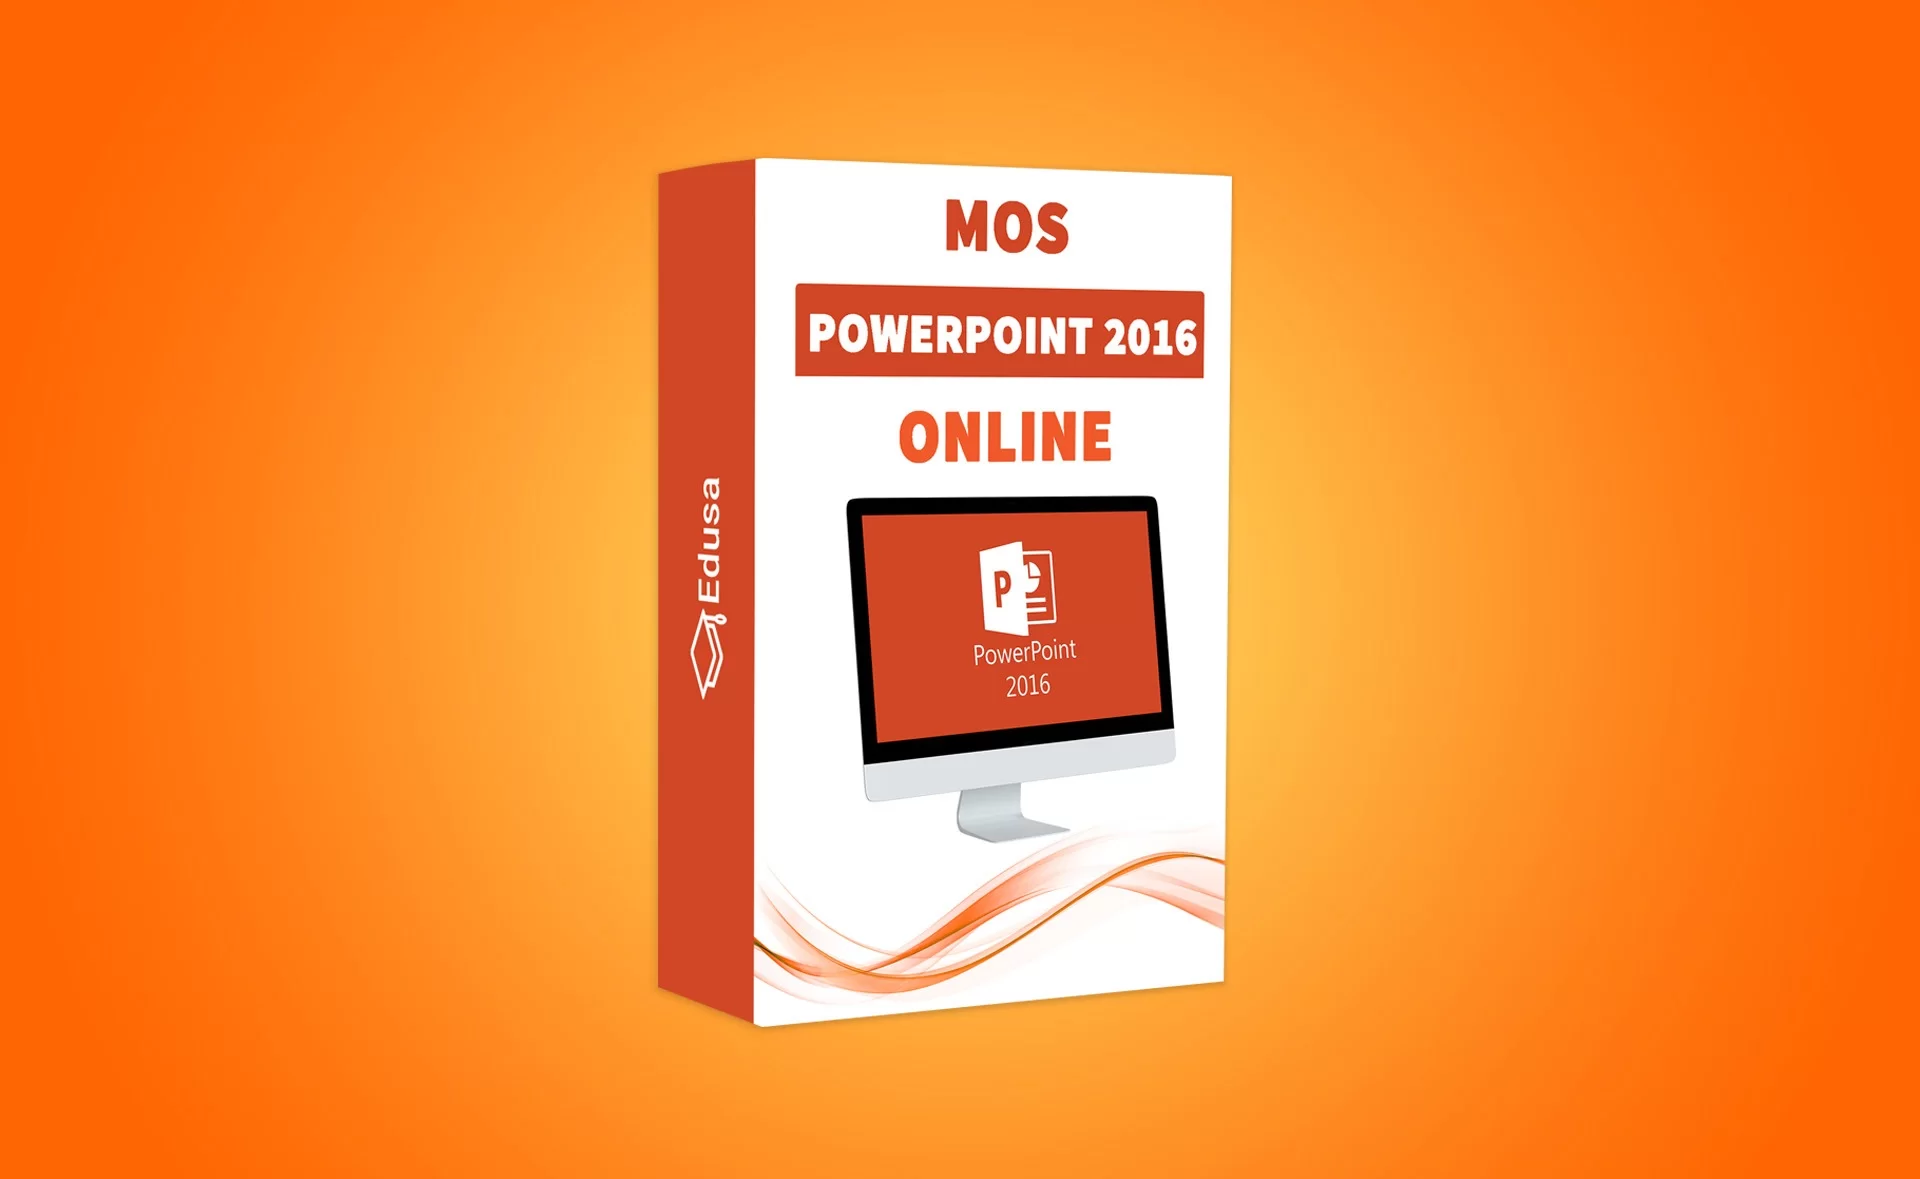 mos powerpoint 2016 online edusa 2